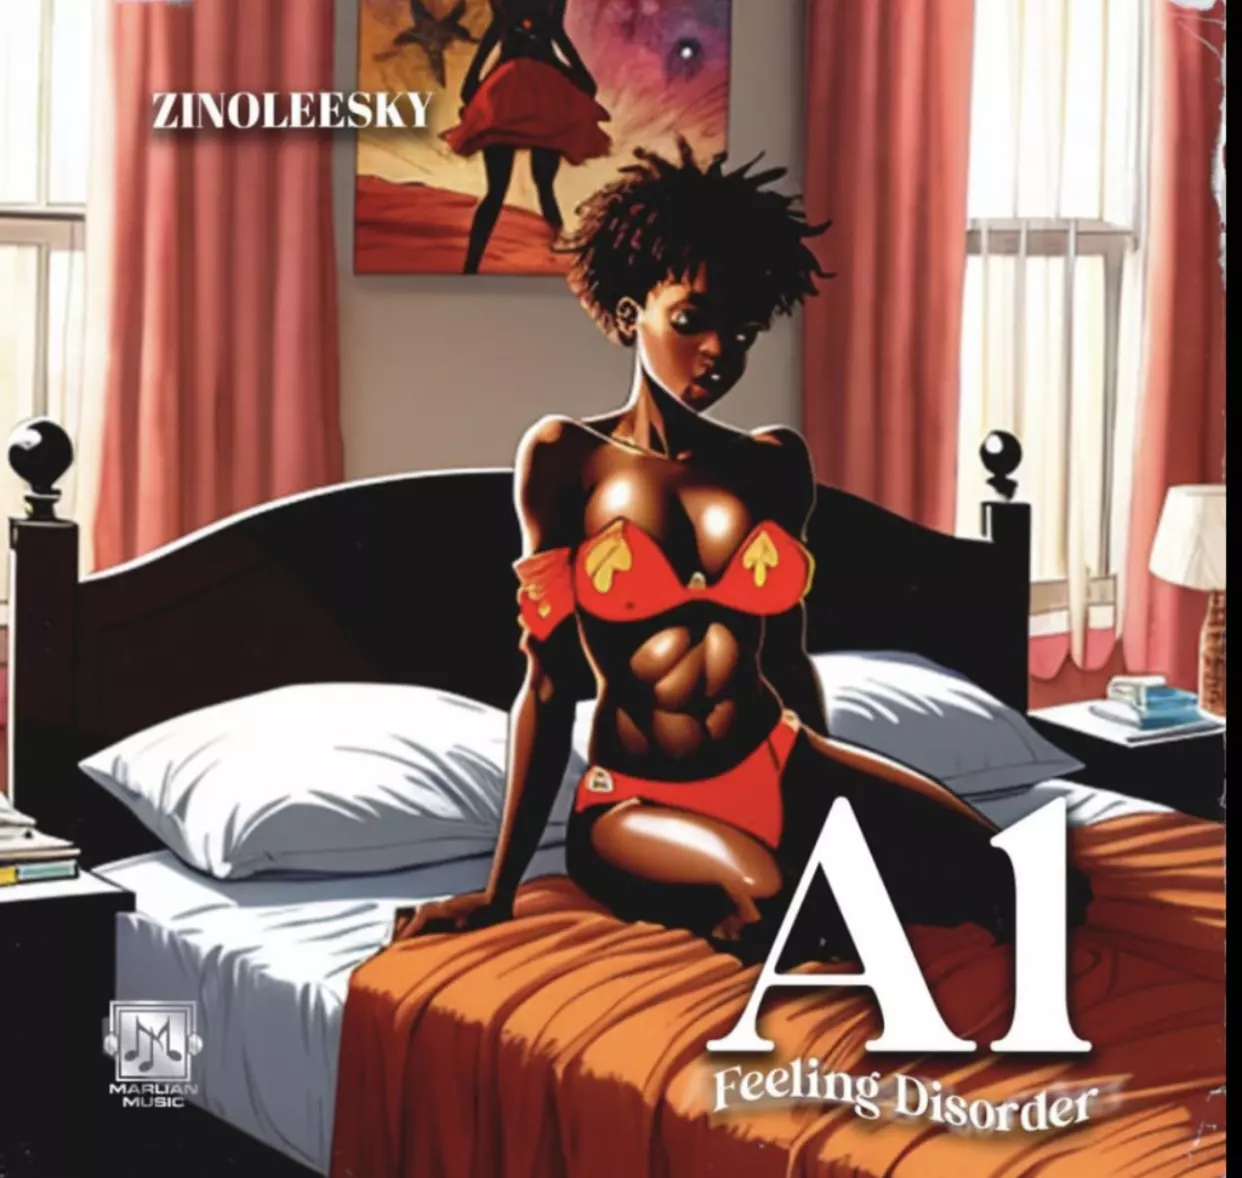 Zinoleesky - A1(Feeling Disorder) Mp3 Download